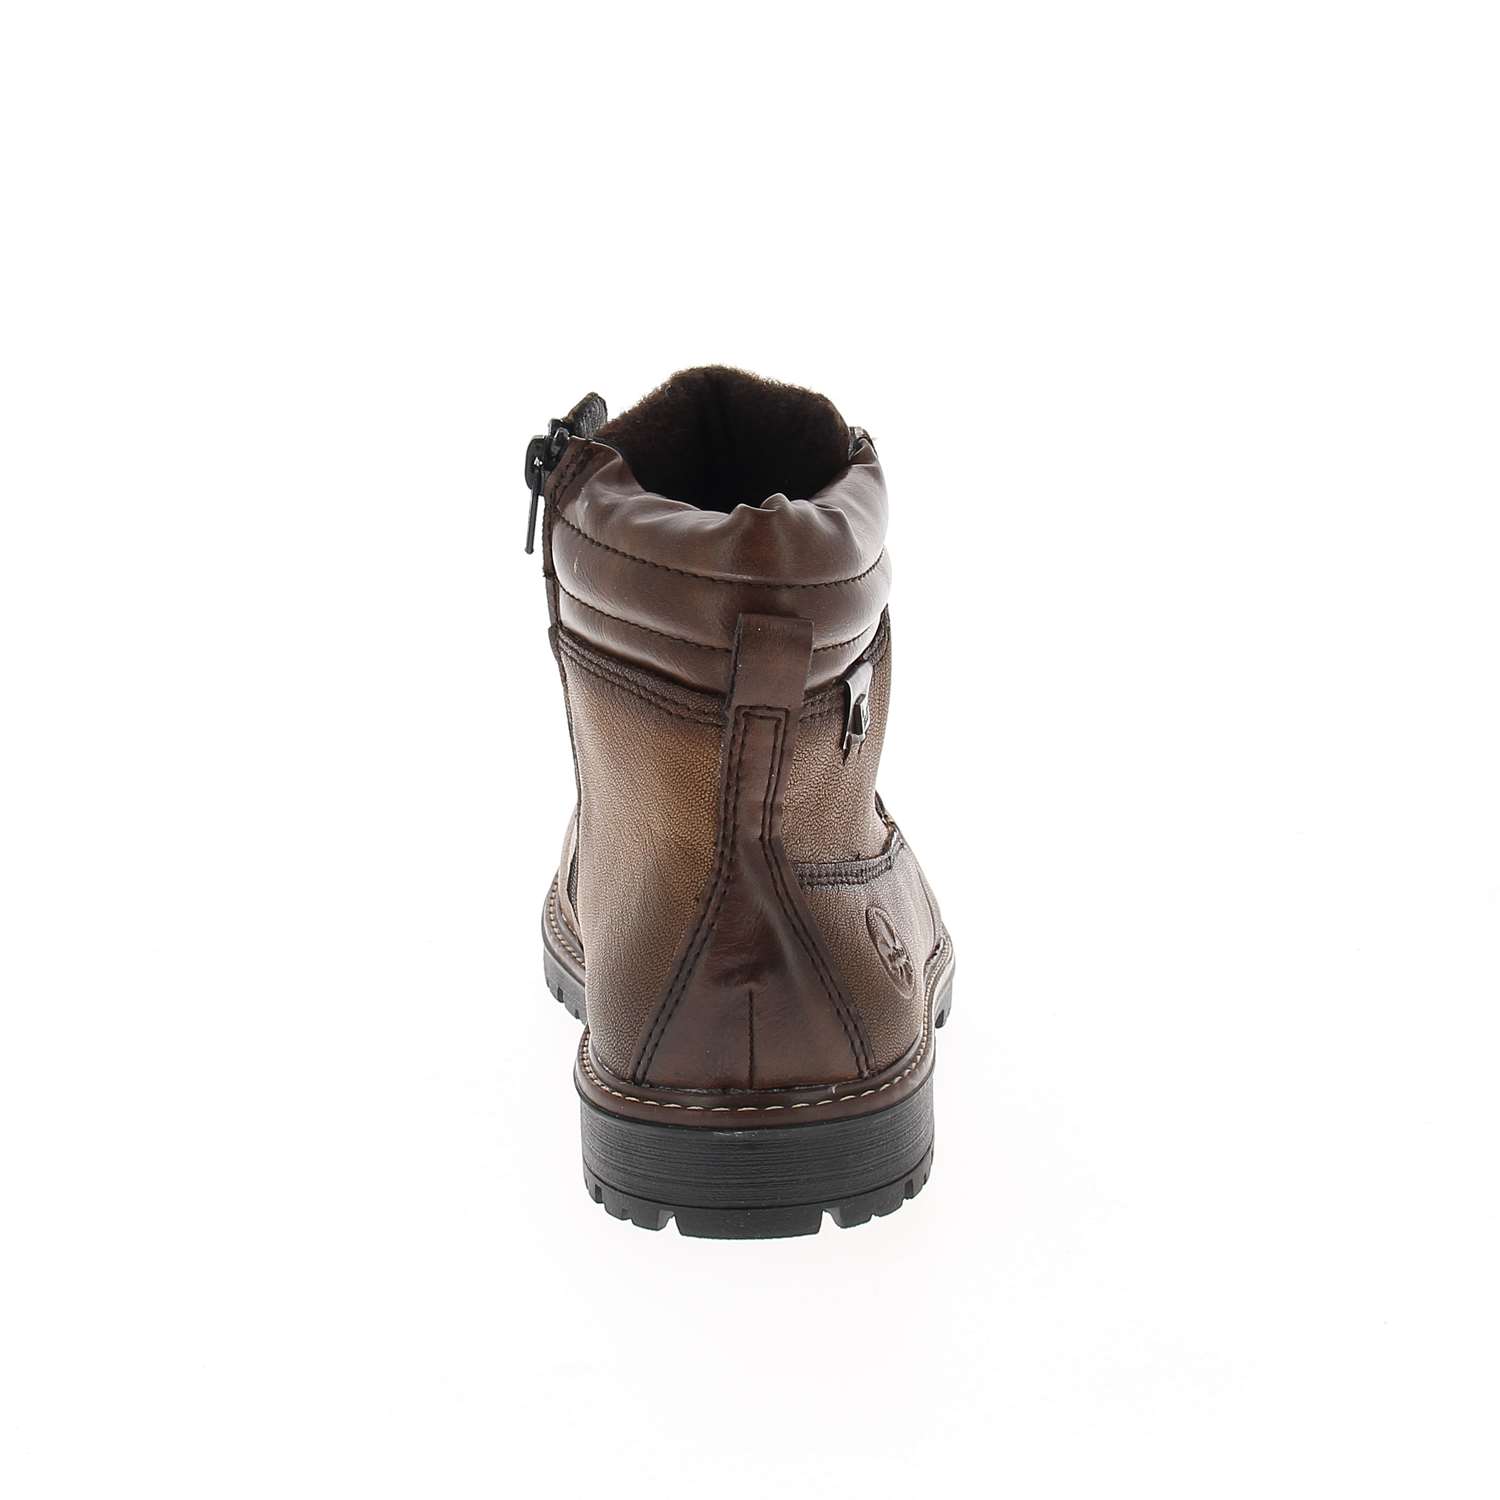 04 - RIELYLI - RIEKER - Boots et bottines - Cuir